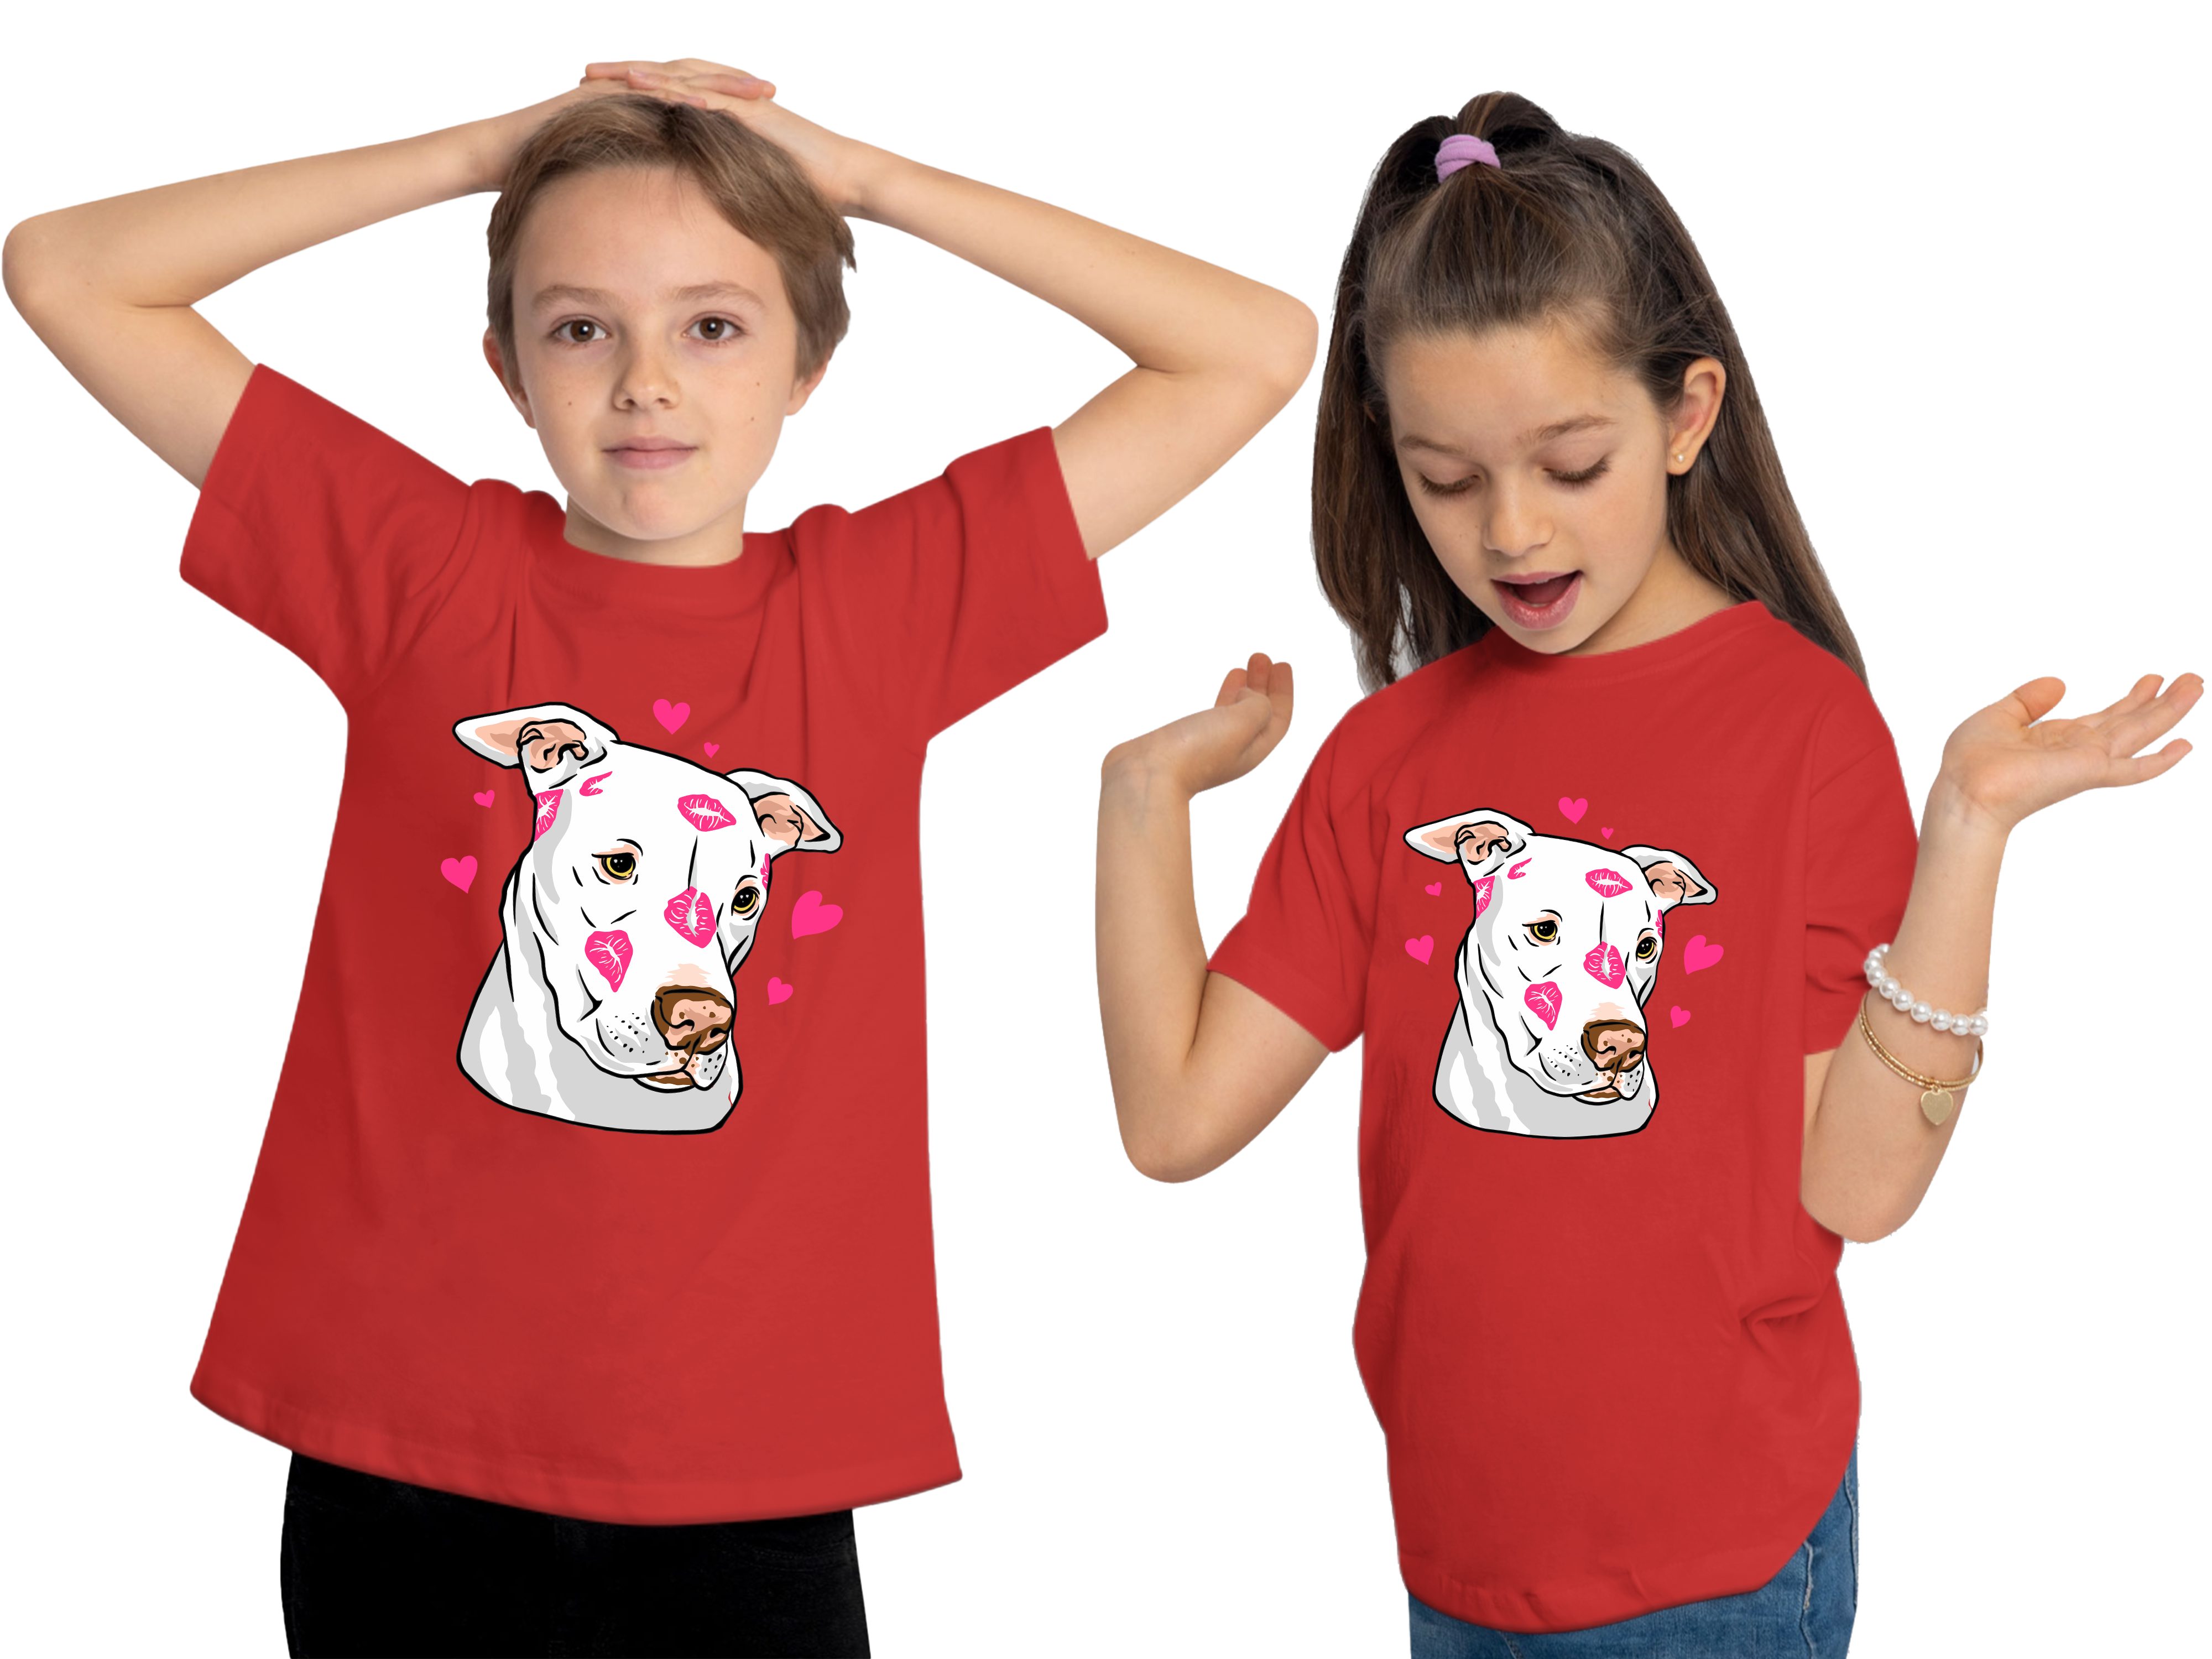 MyDesign24 Print-Shirt Kinder rot Aufdruck, Pitbull Baumwollshirt Hunde i229 mit Herzen bedrucktes T-Shirt mit 